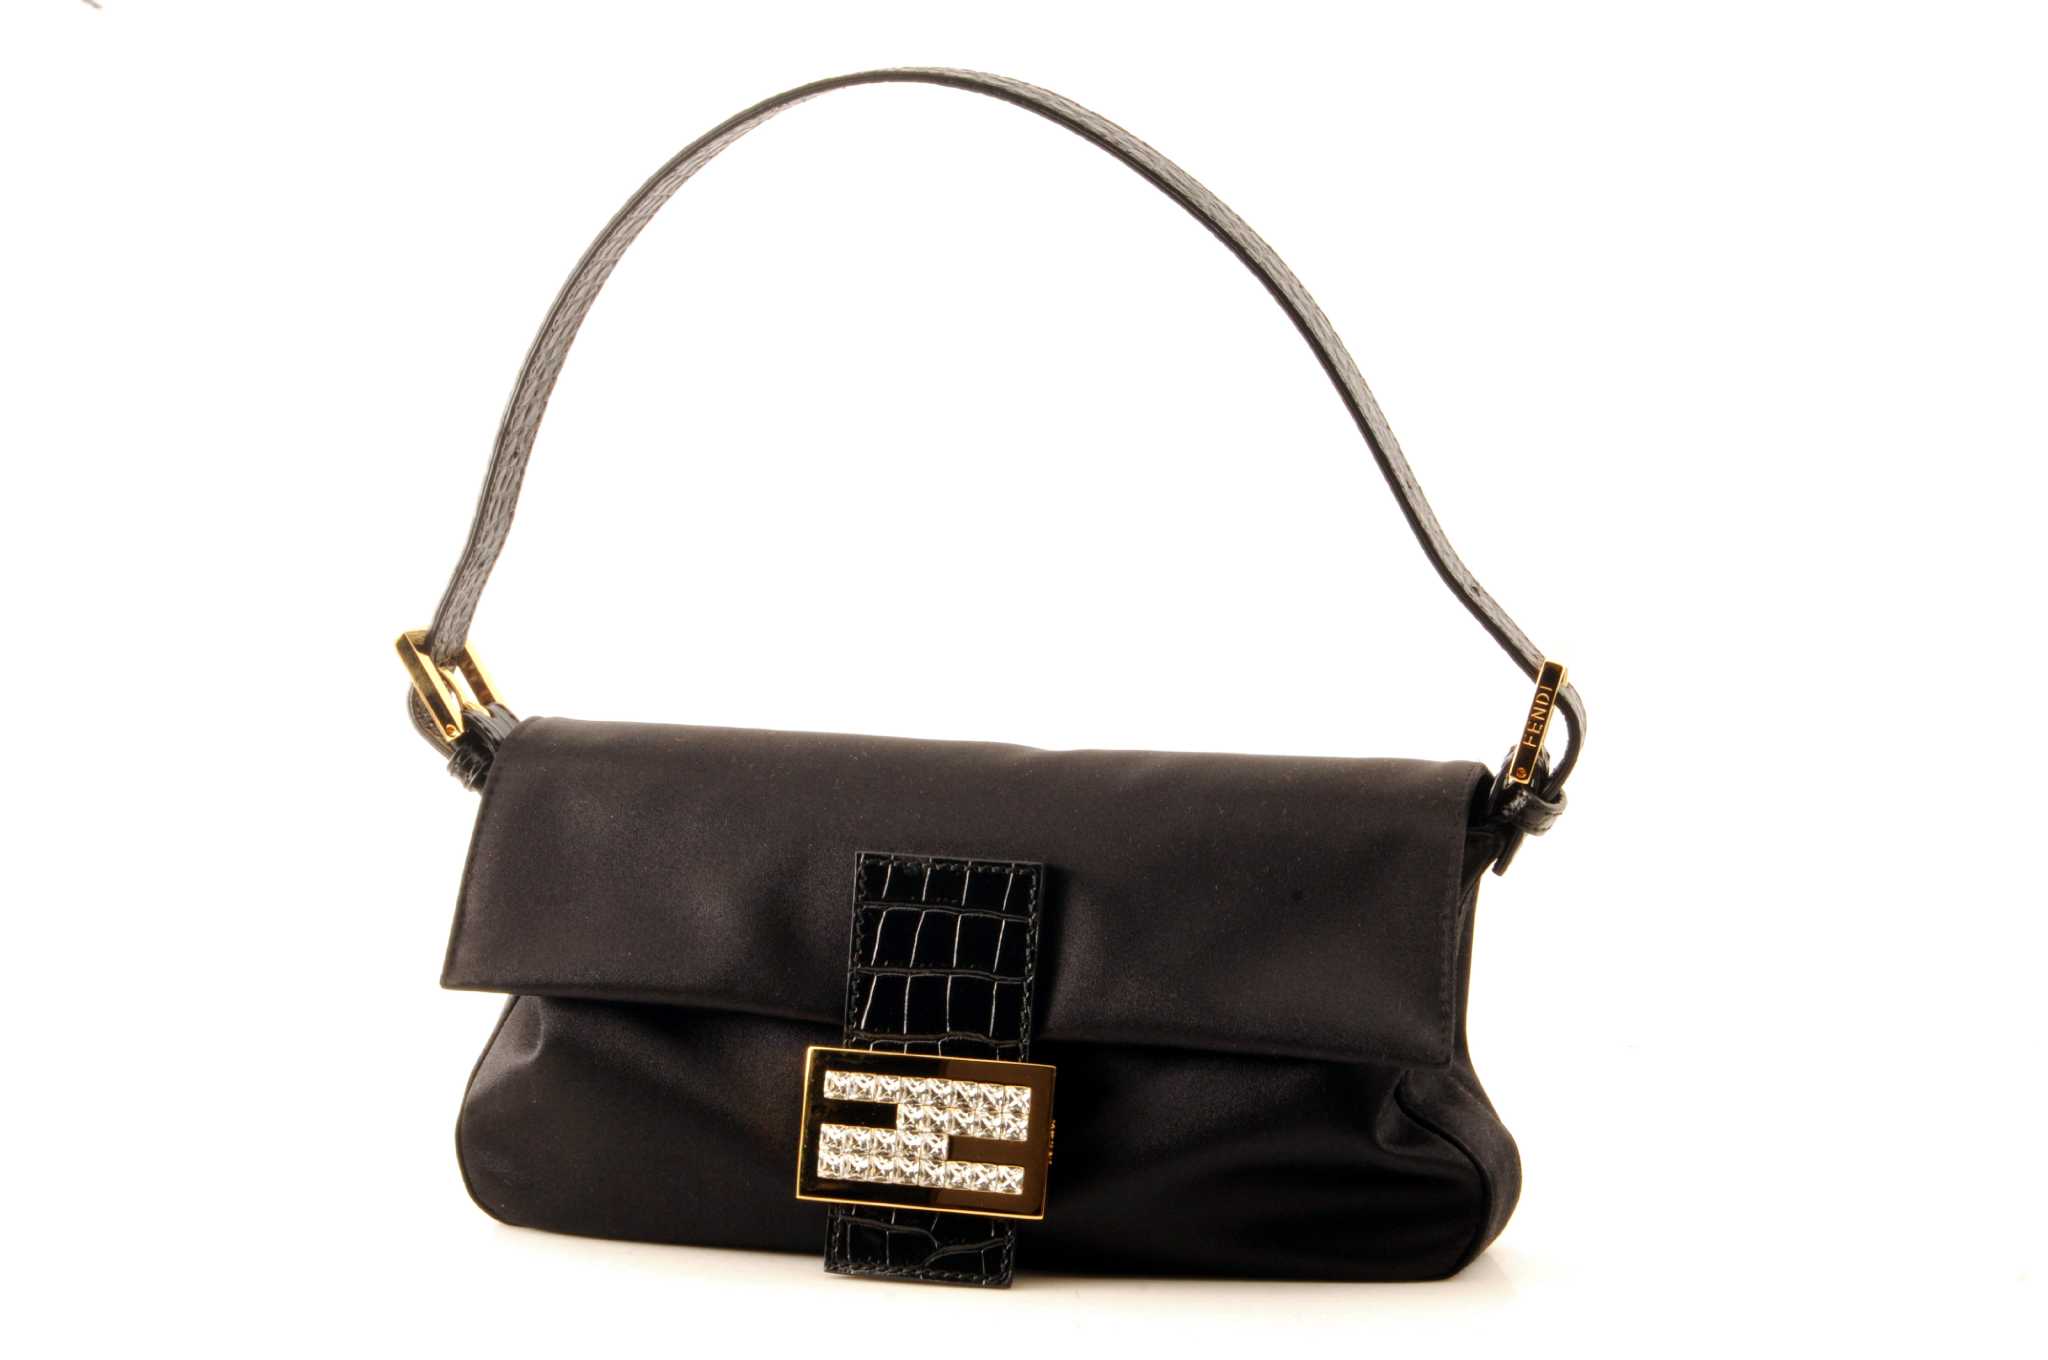 Fendi's Baguette: The most sought-after handbag turns 25, Culture